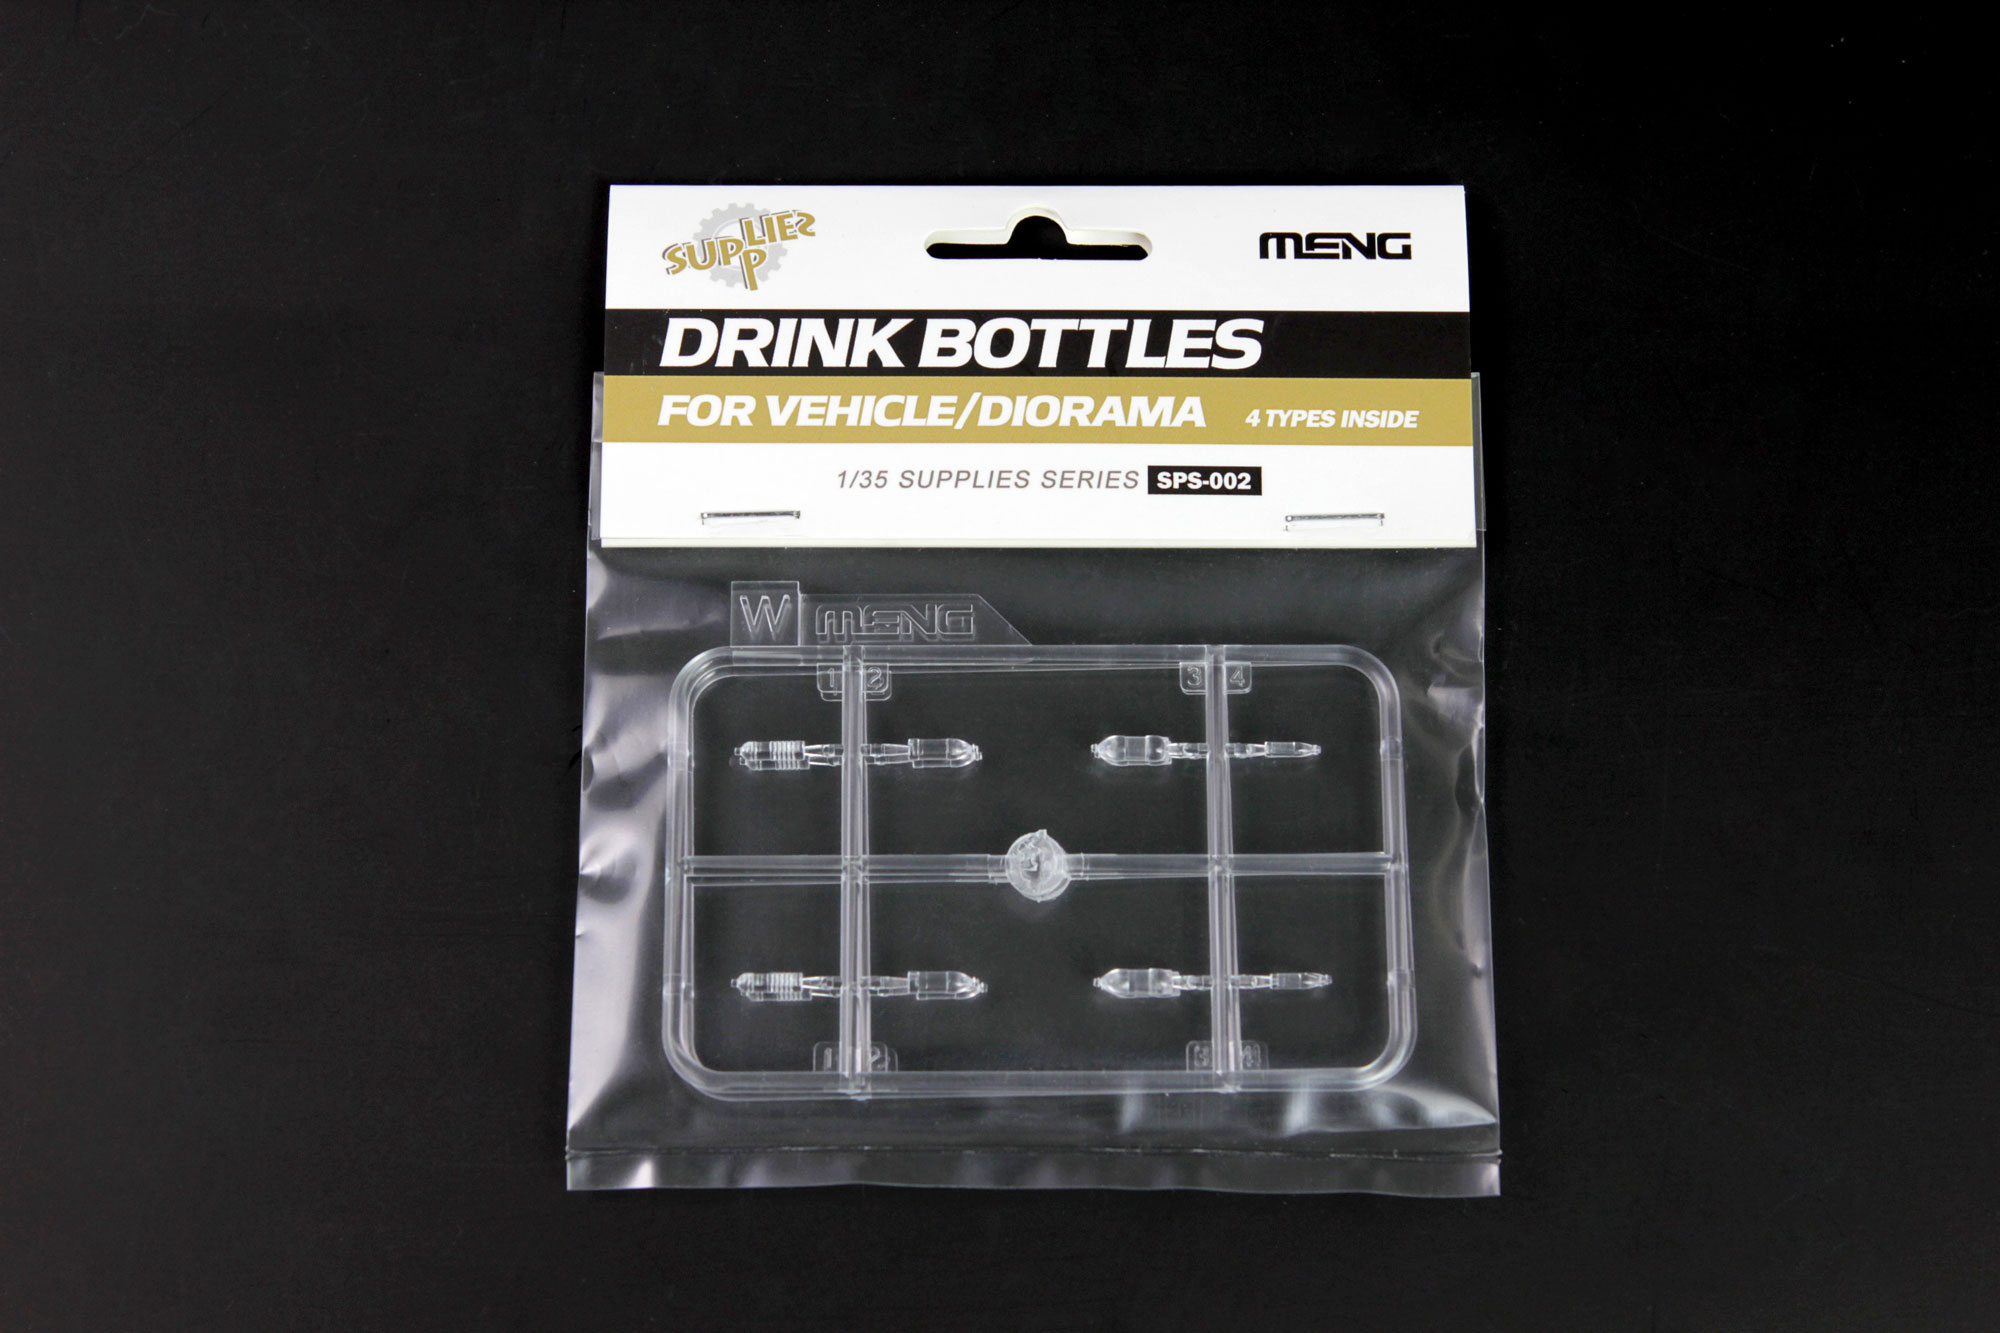 Trinkflaschen - Drink Bottles For Vehicle/Diorama; 4 Types Inside